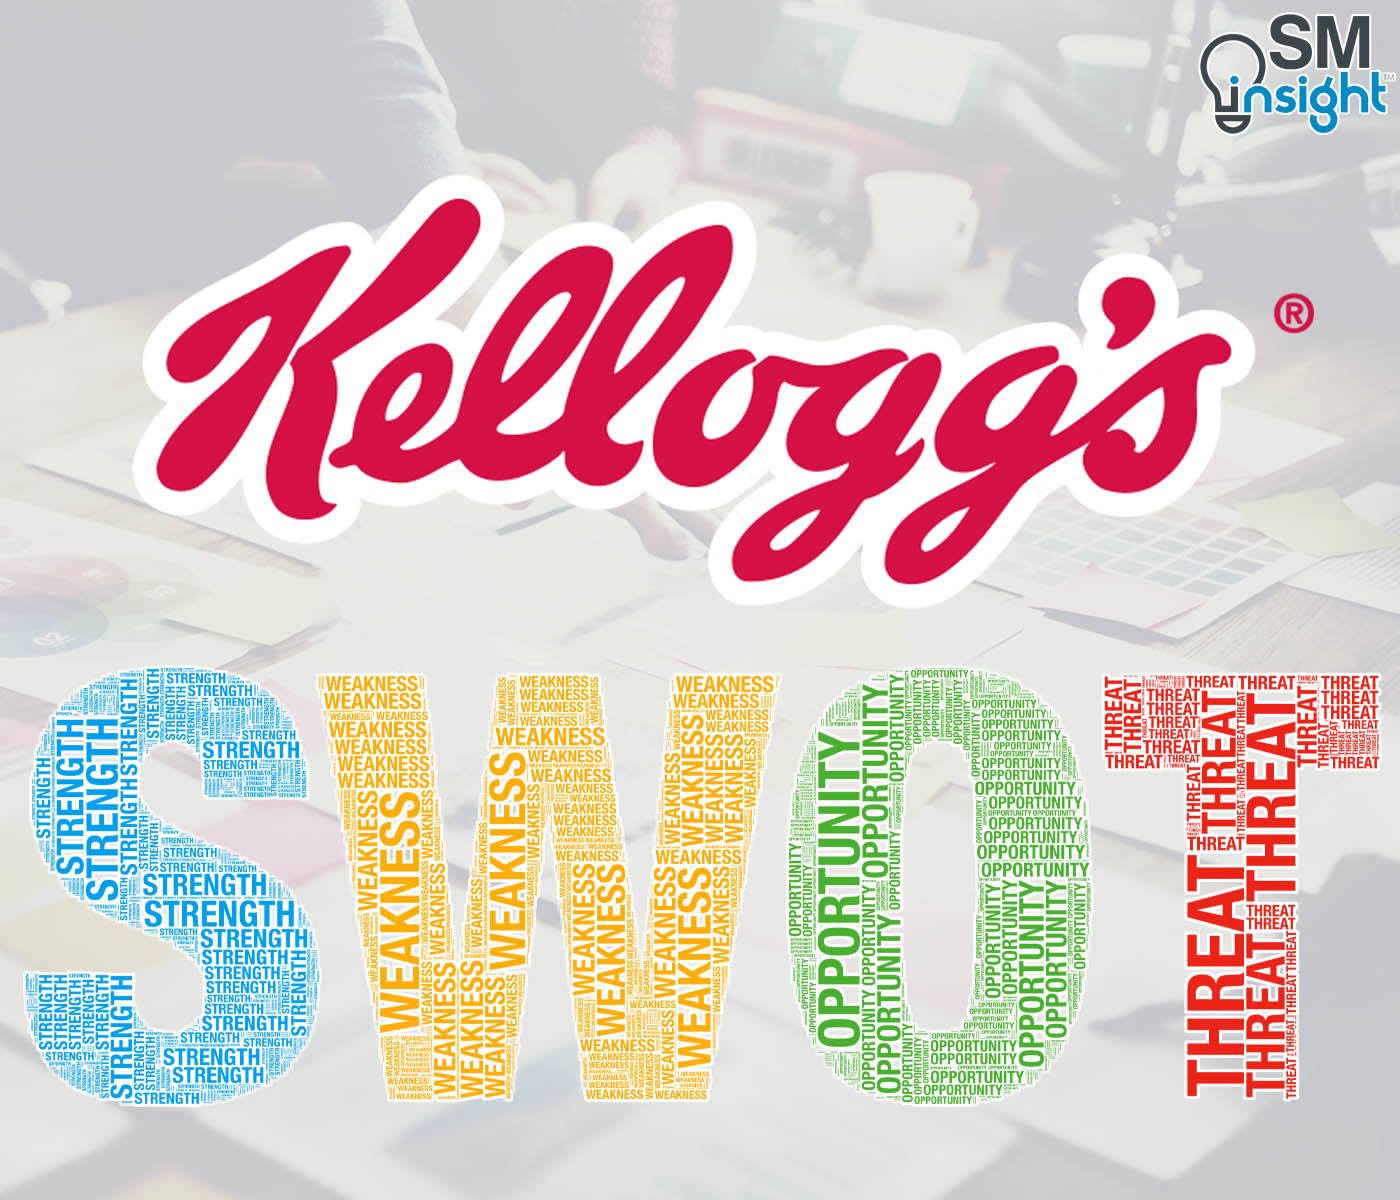 Kelloggs SWOT